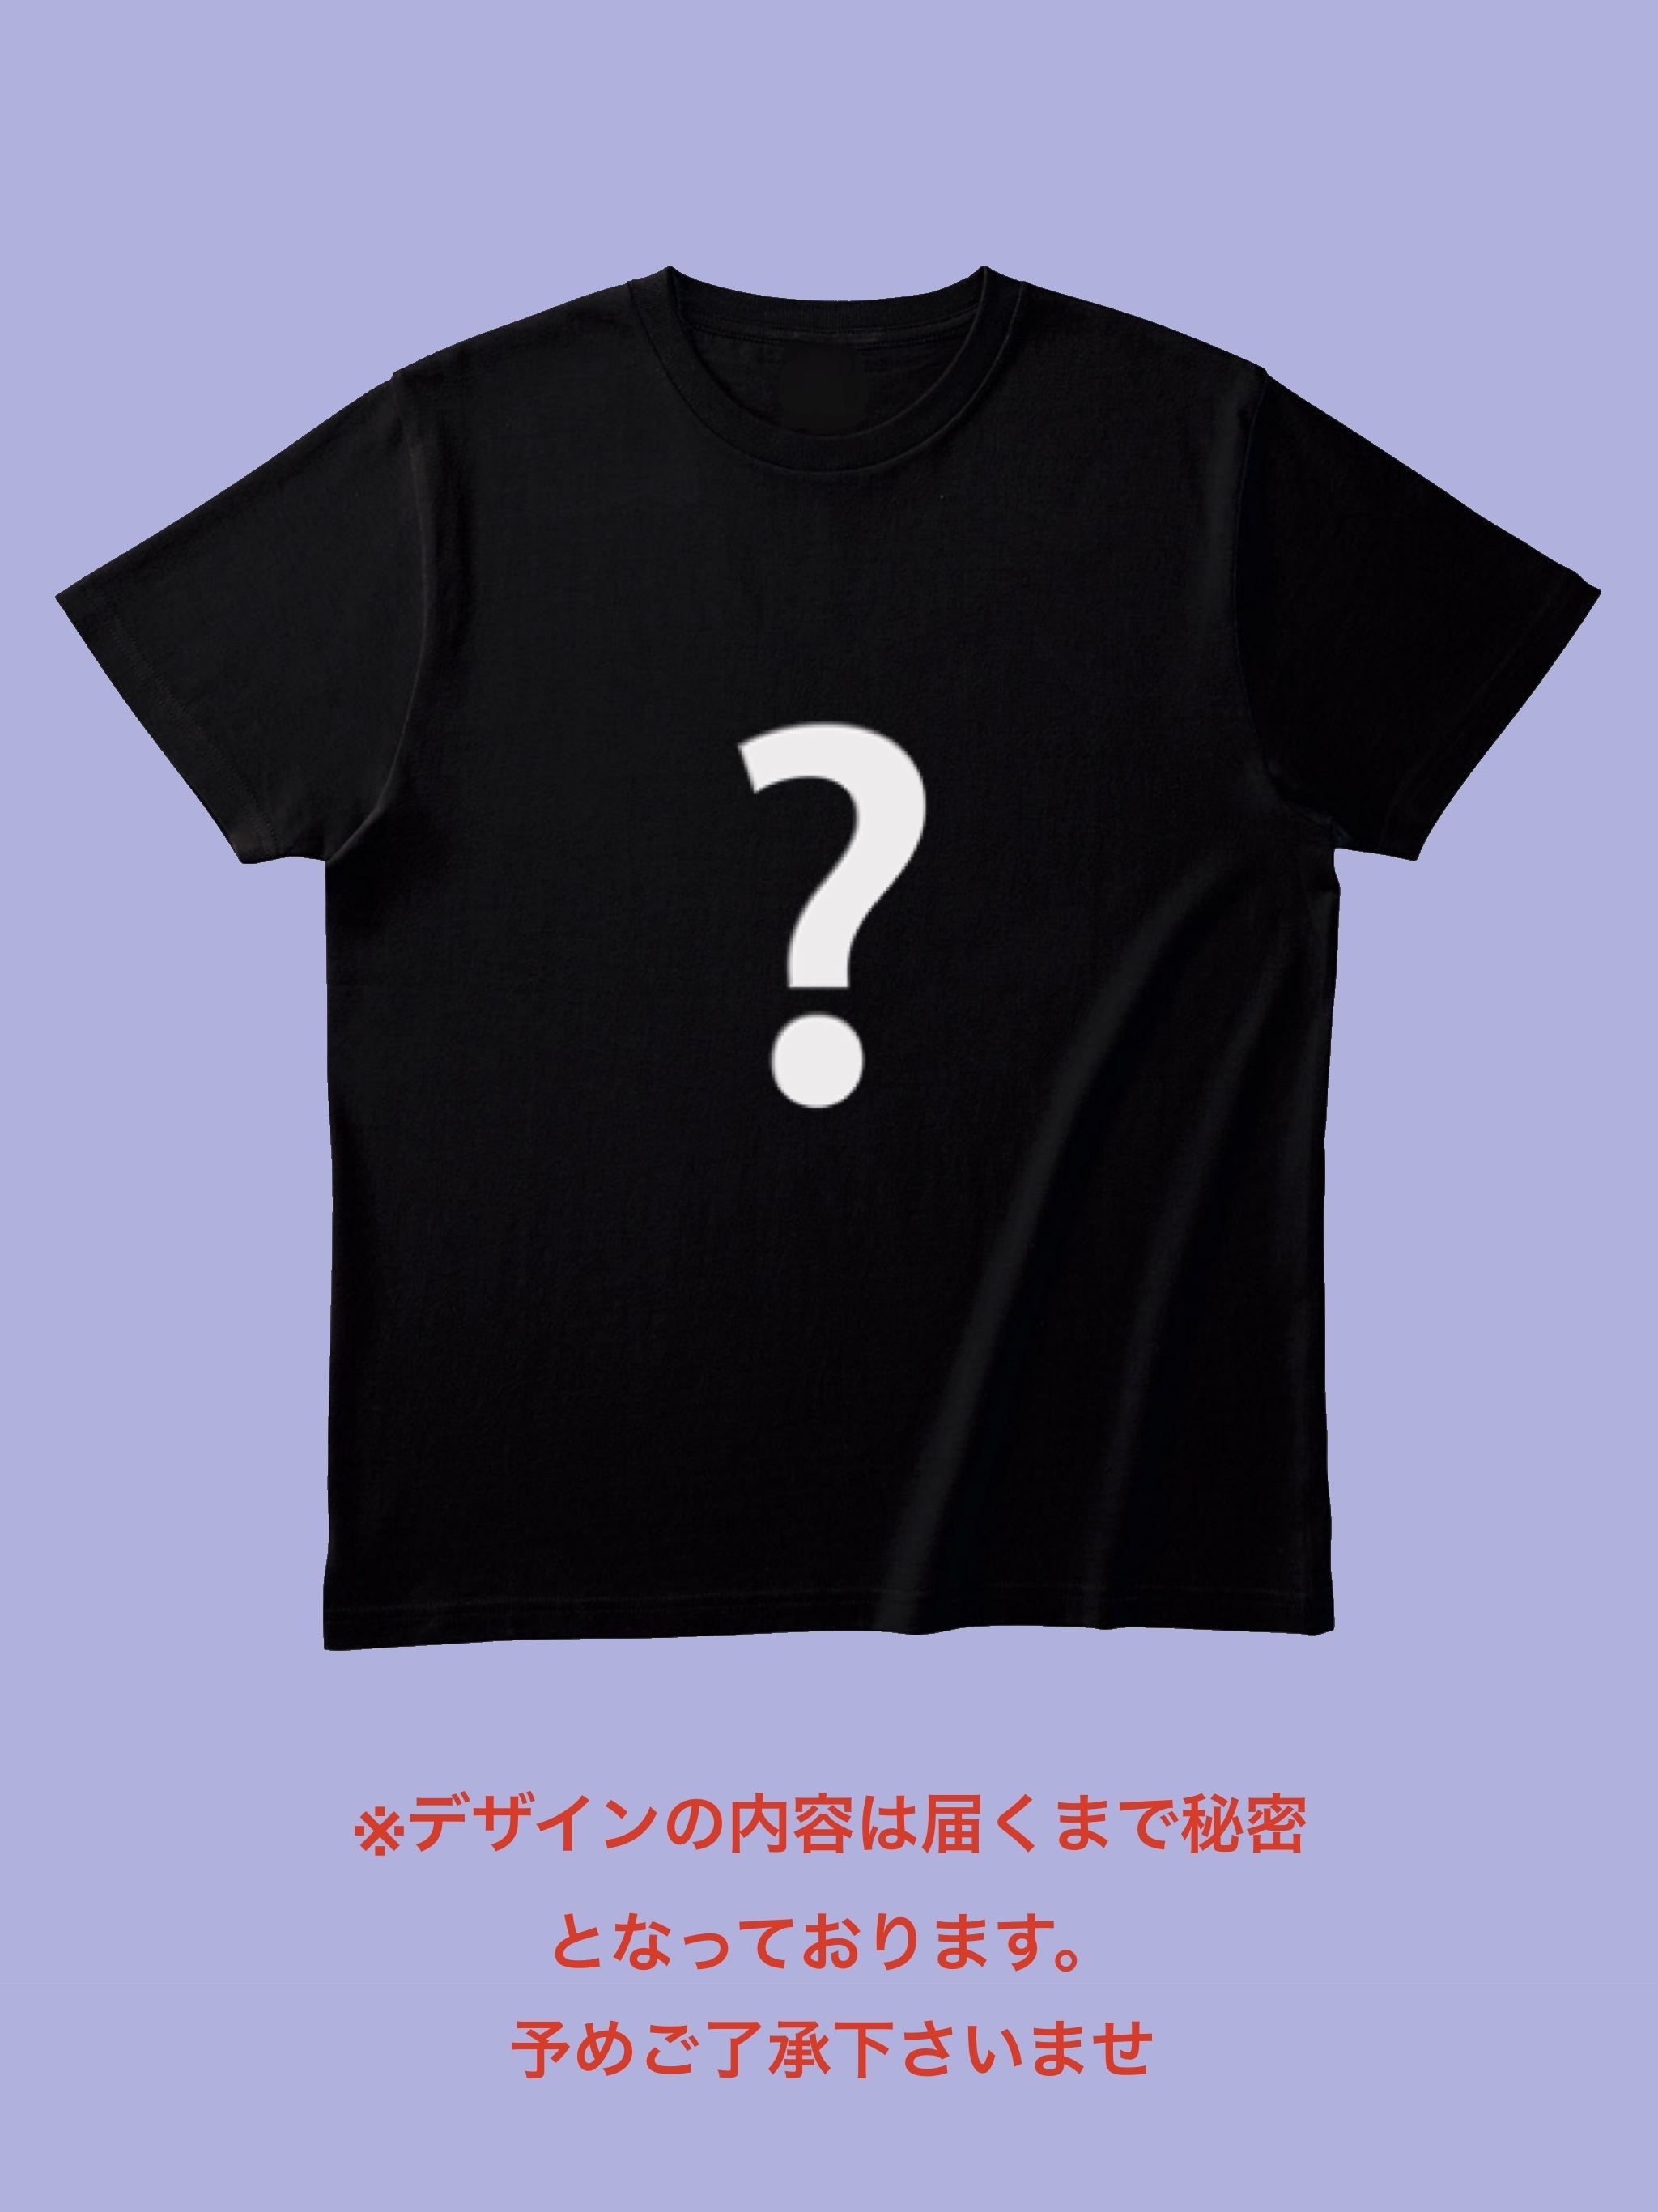 SUSU “privacy” STAFF T-shirt